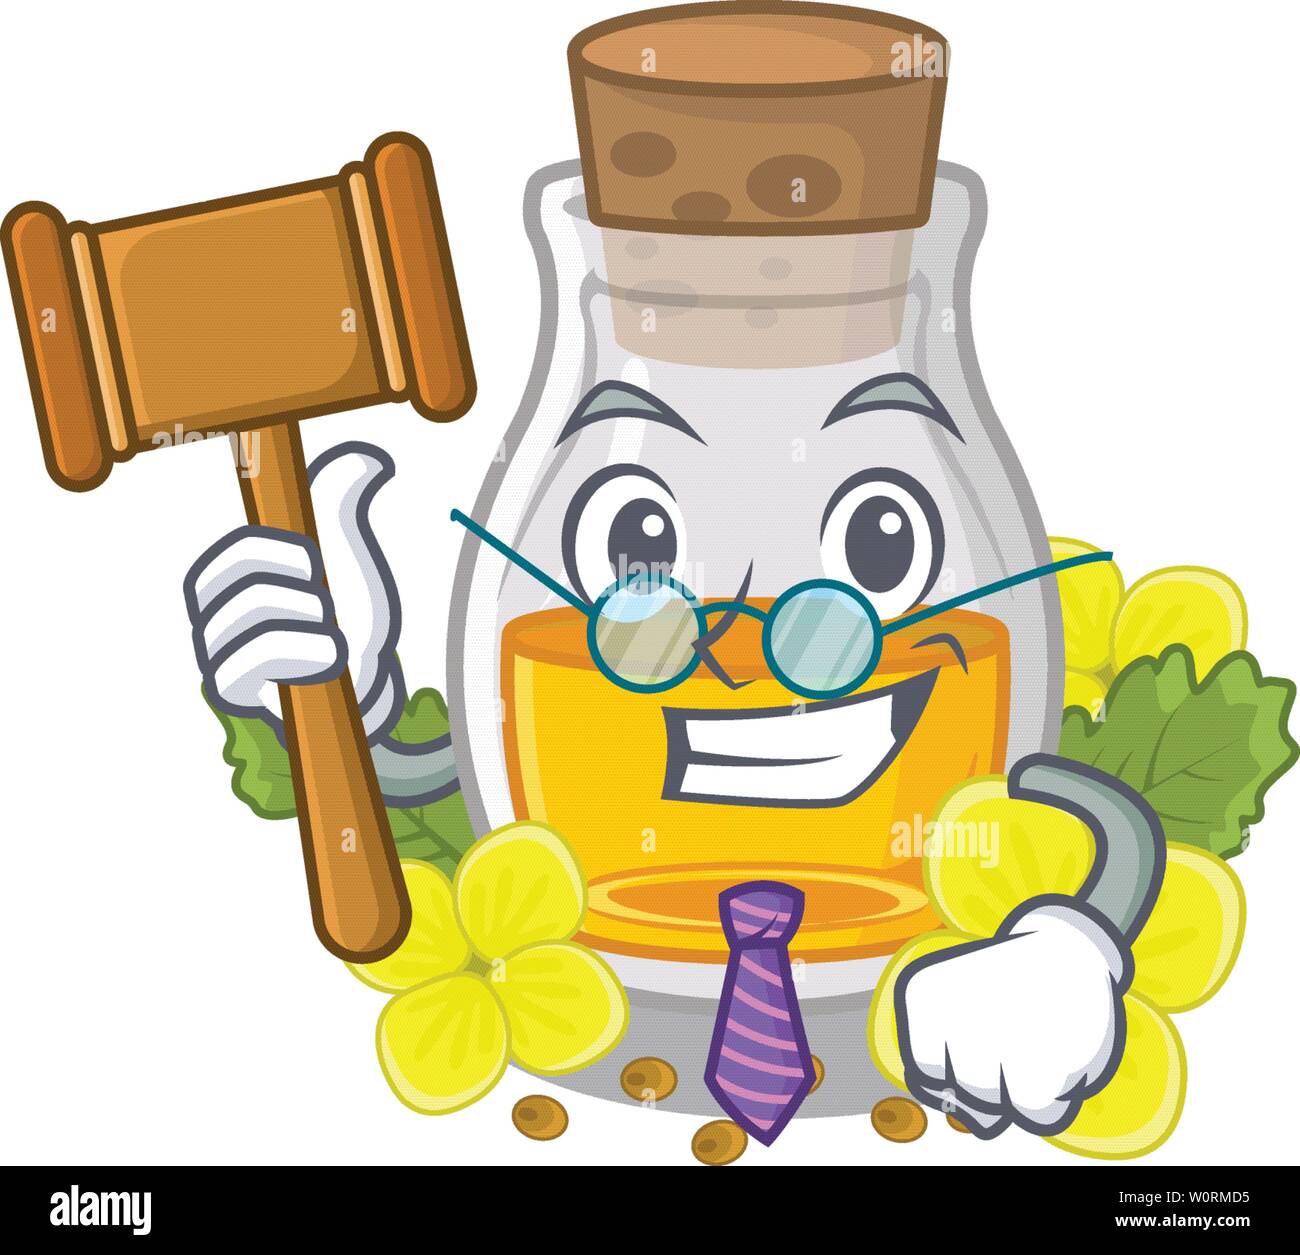 Judge mustard oil in the cartoon shape Stock Vector